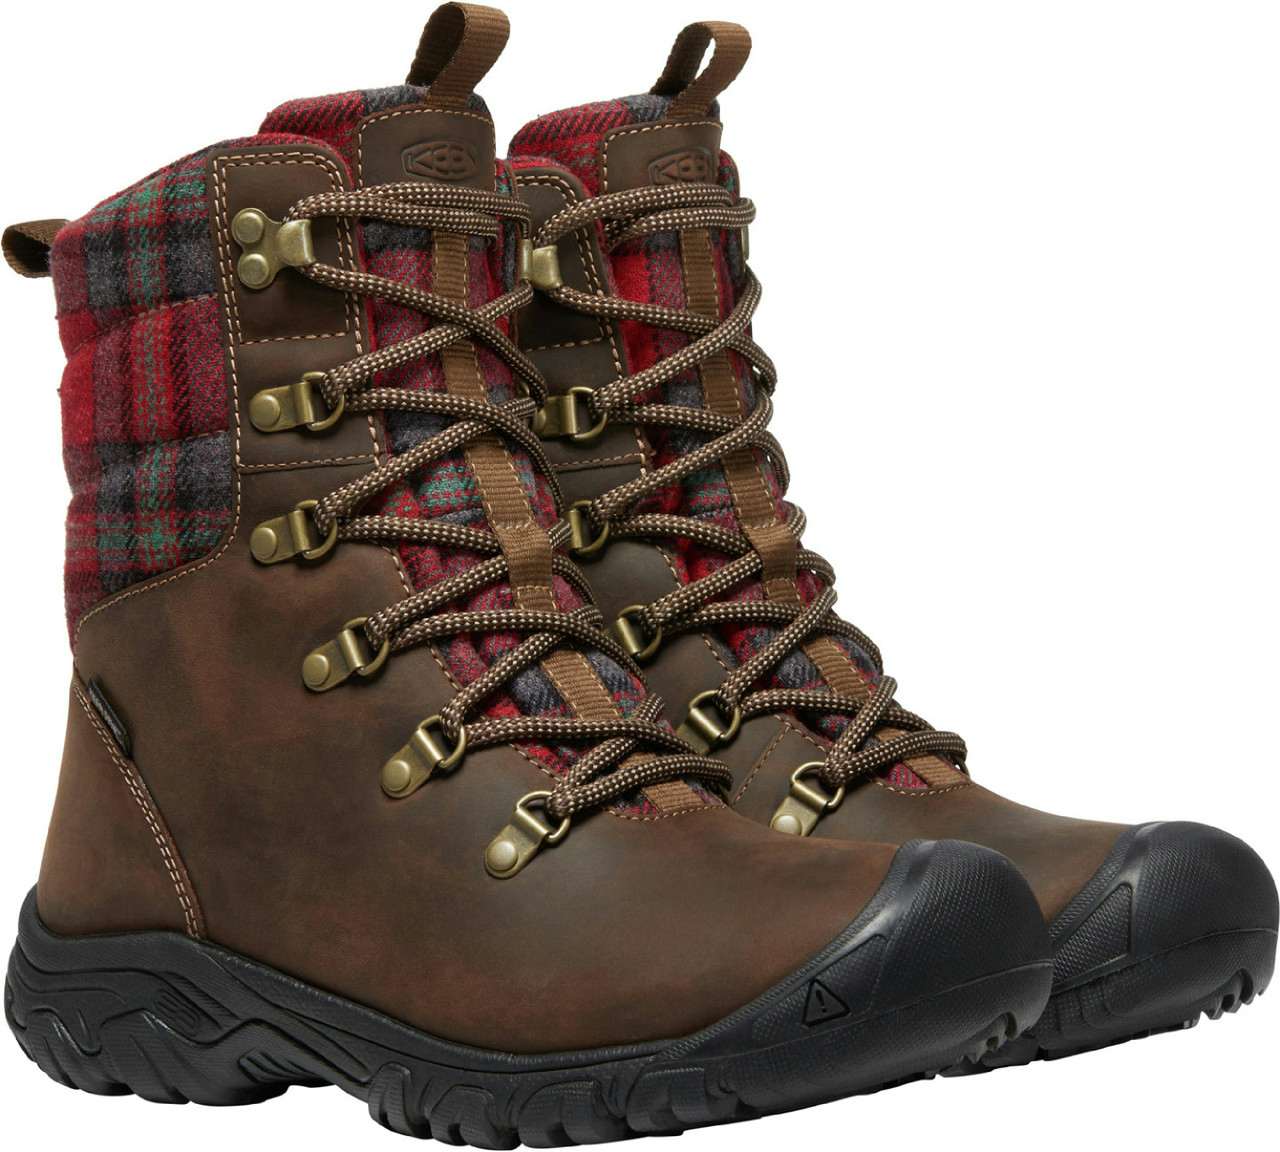 Greta Waterproof Winter Boots Dark Brown/Red Plaid